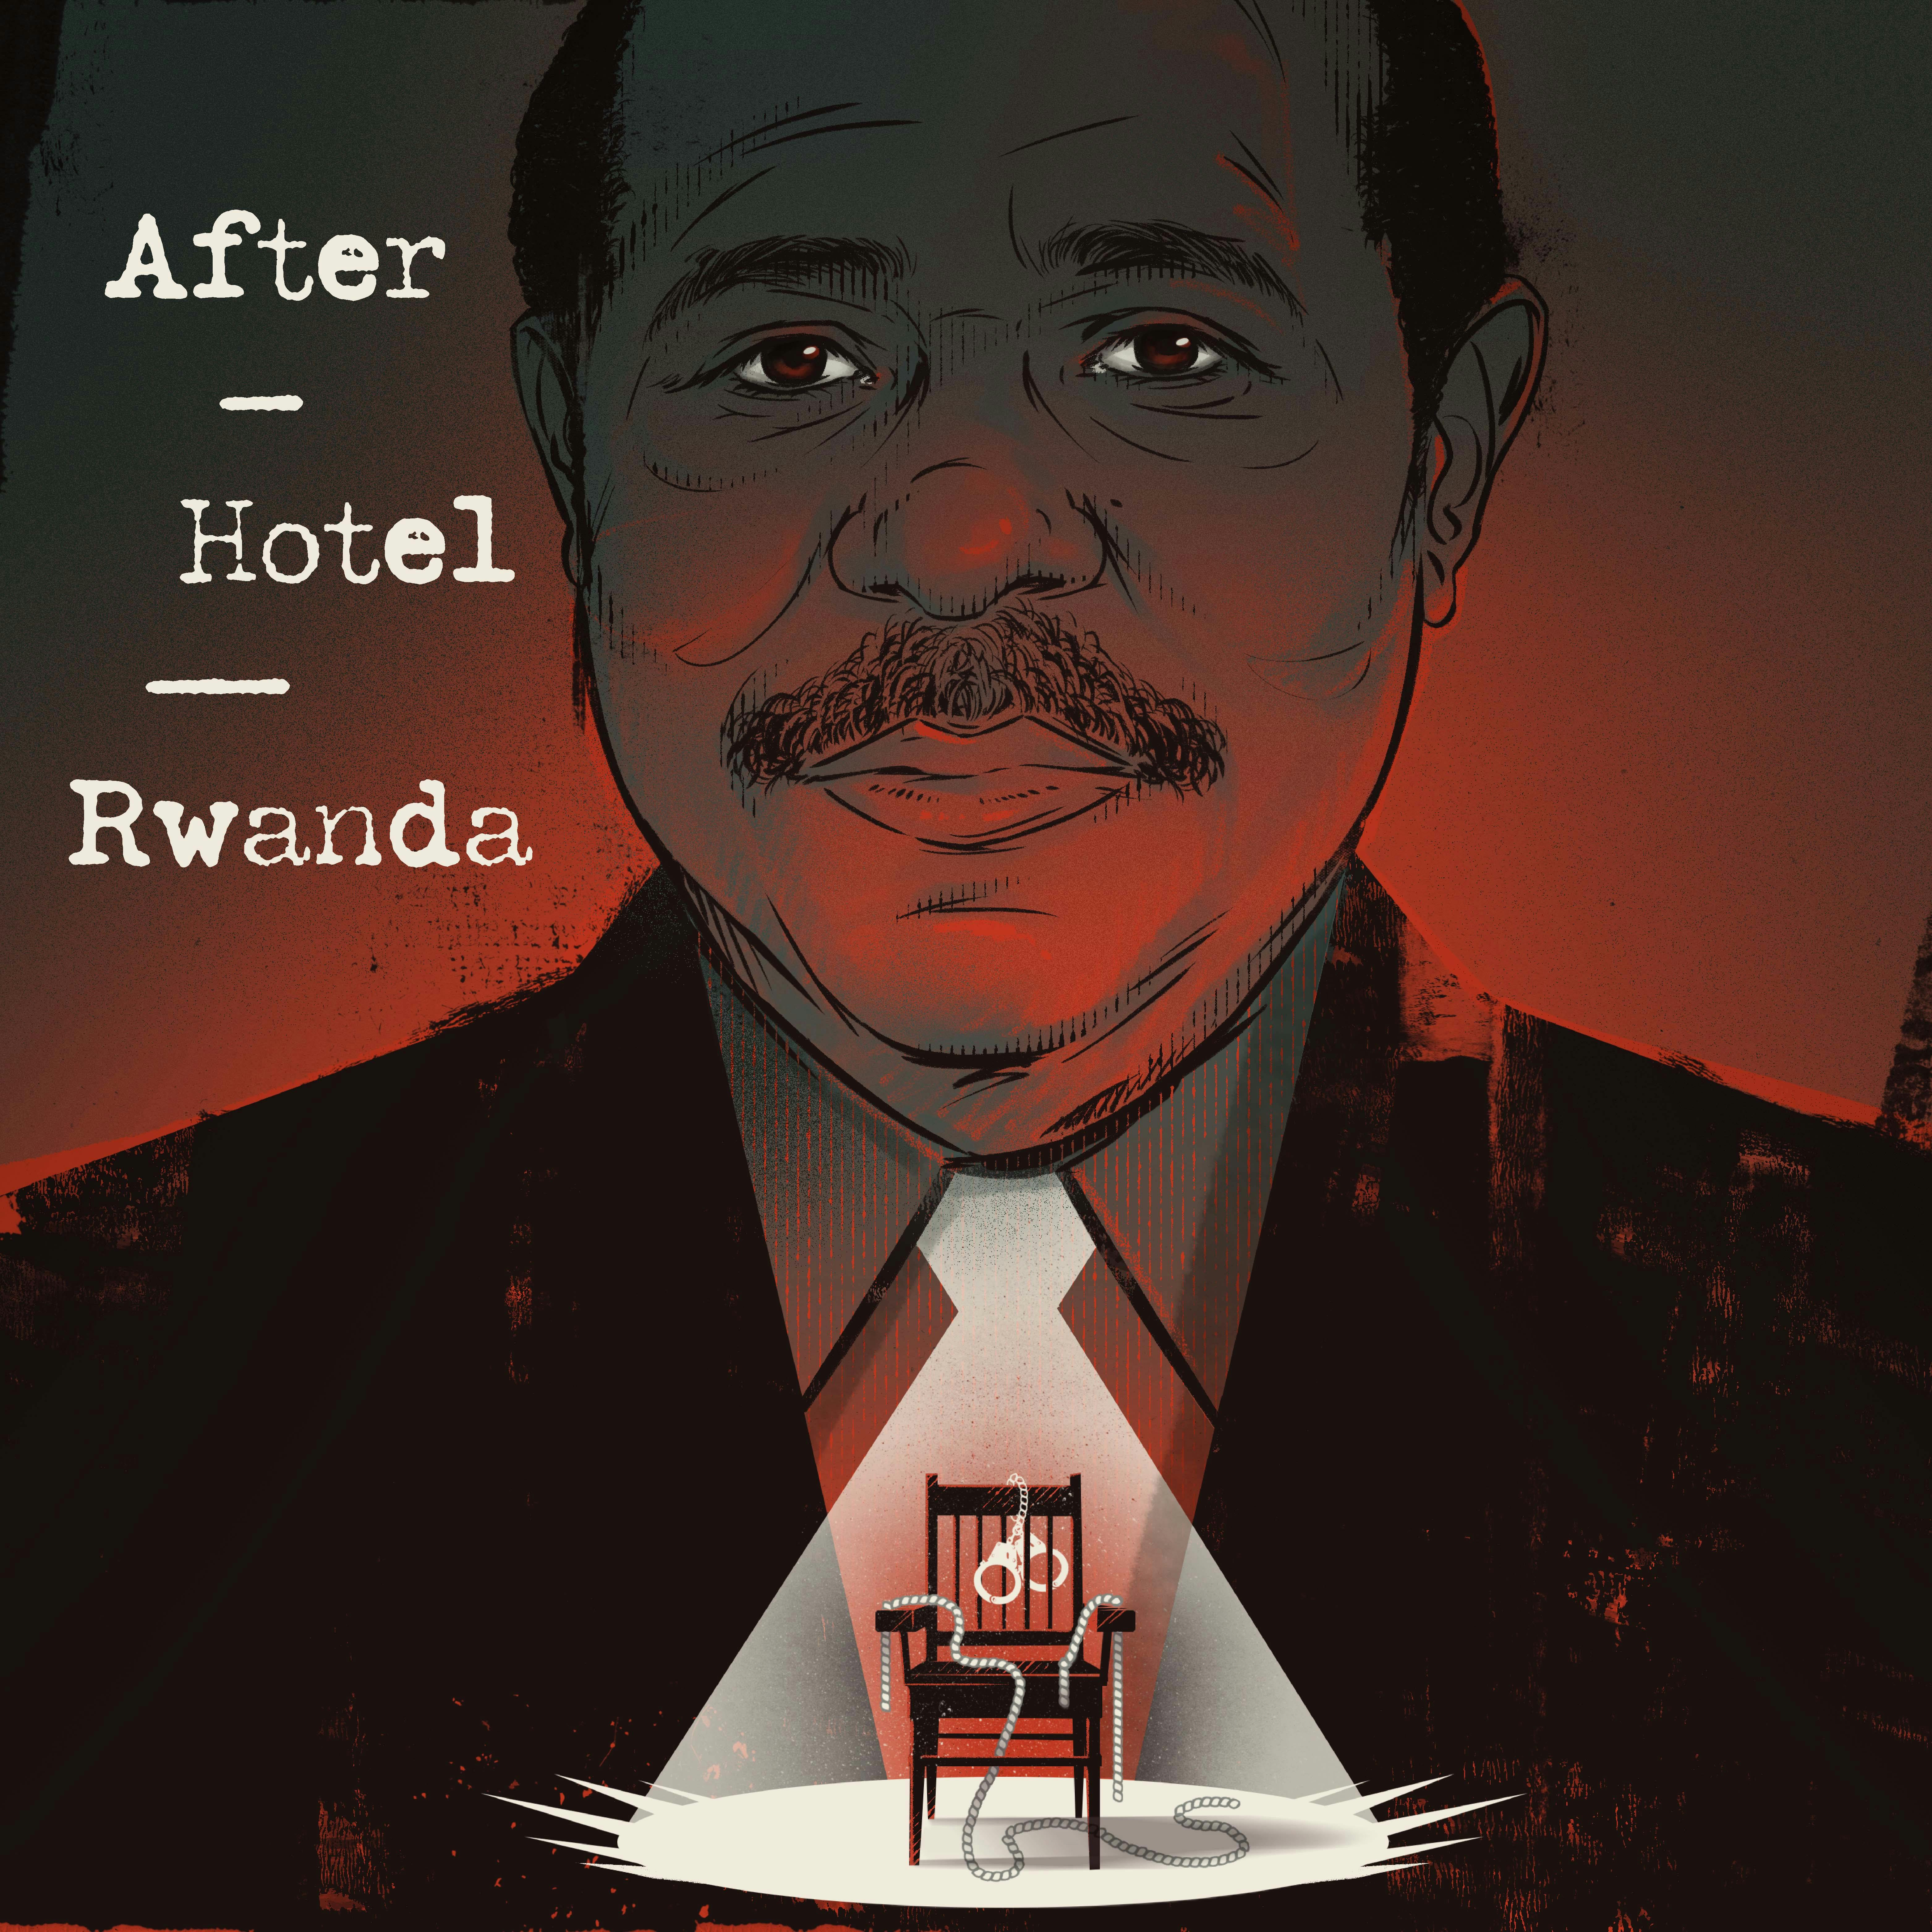 Introducing: After Hotel Rwanda